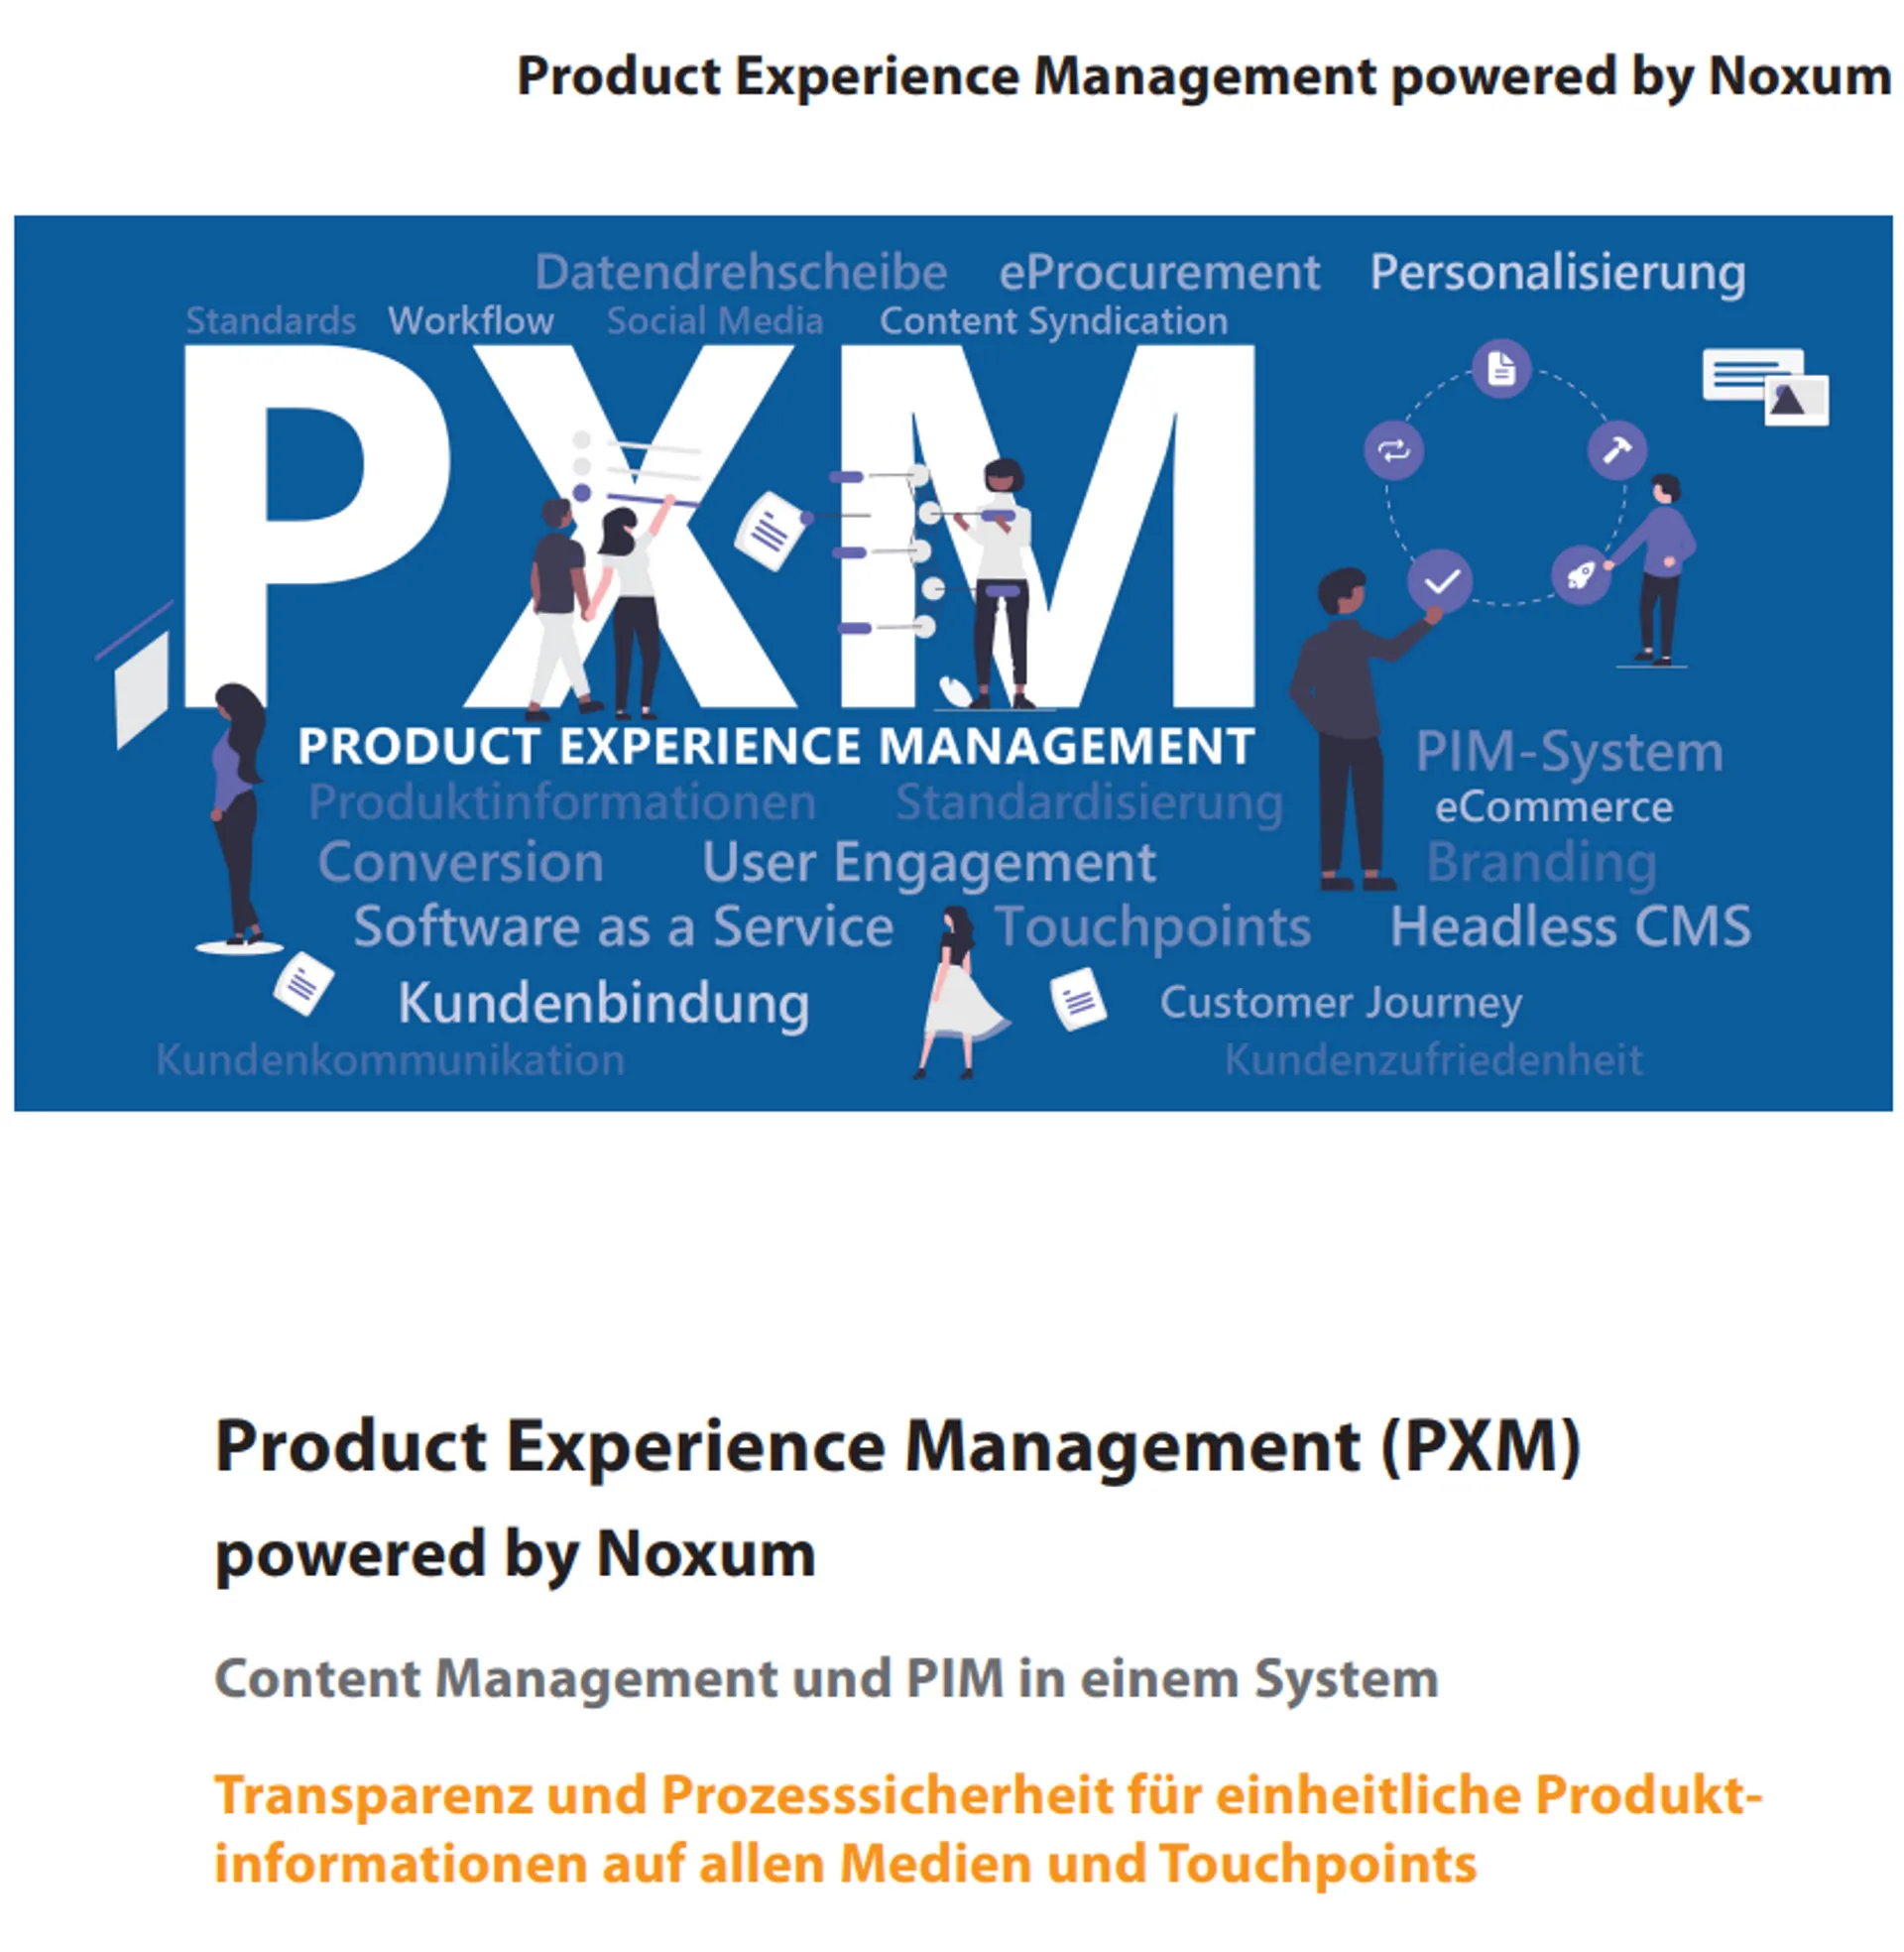 Noxum – Product Experience Management